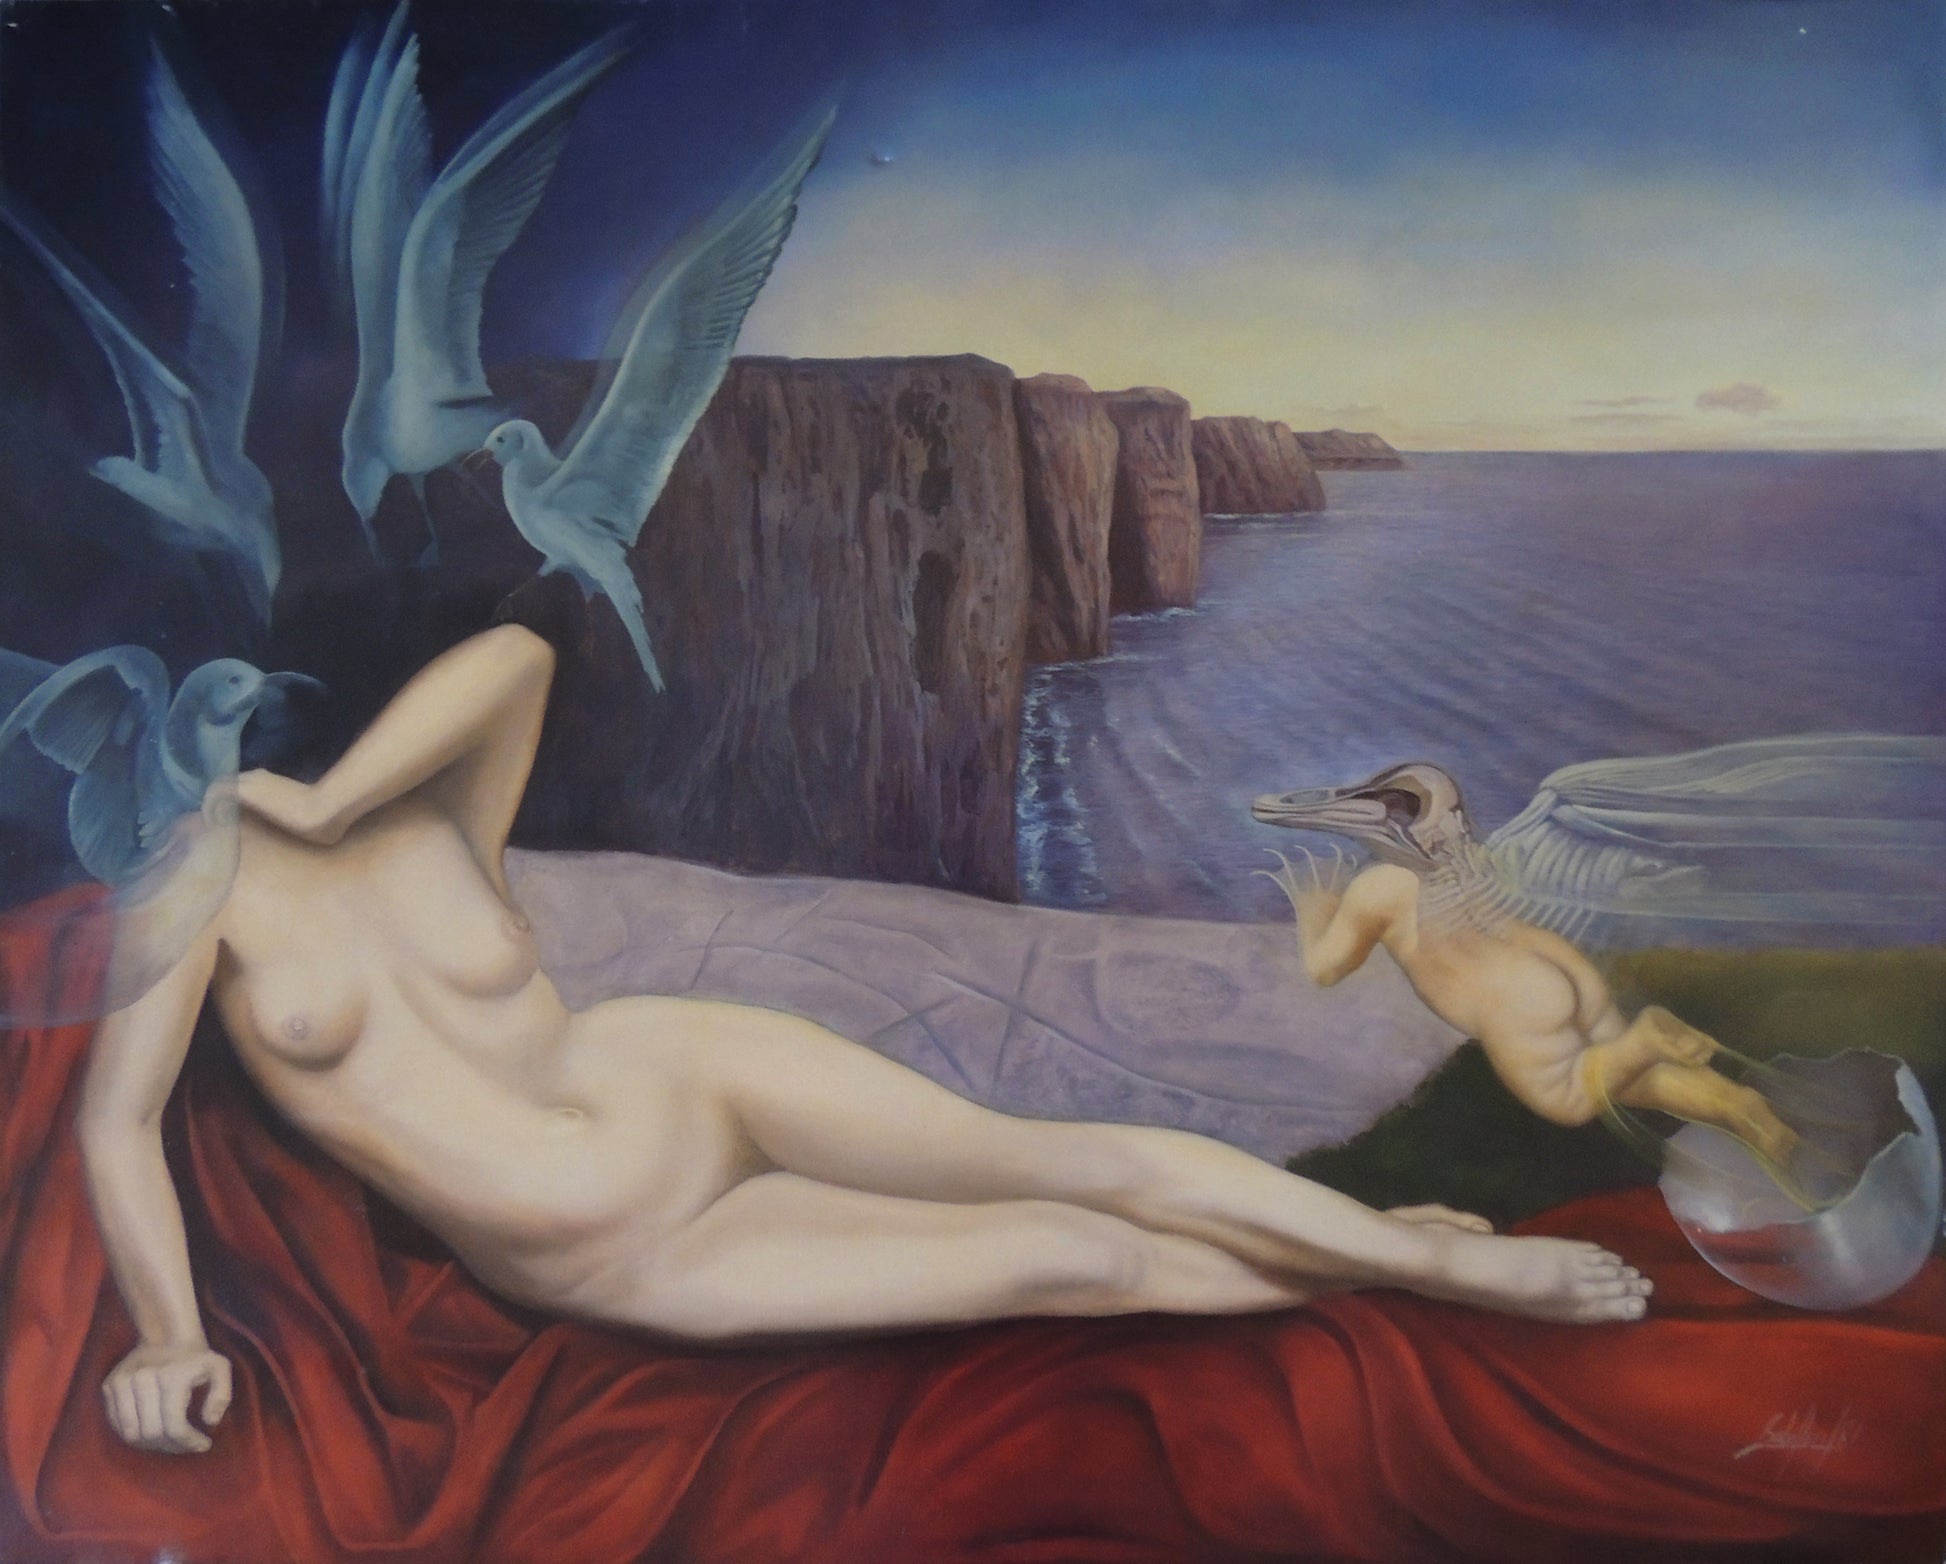 Gregorio Sabillon cuadro surrealista desnudo maja pajaros Gaudifond